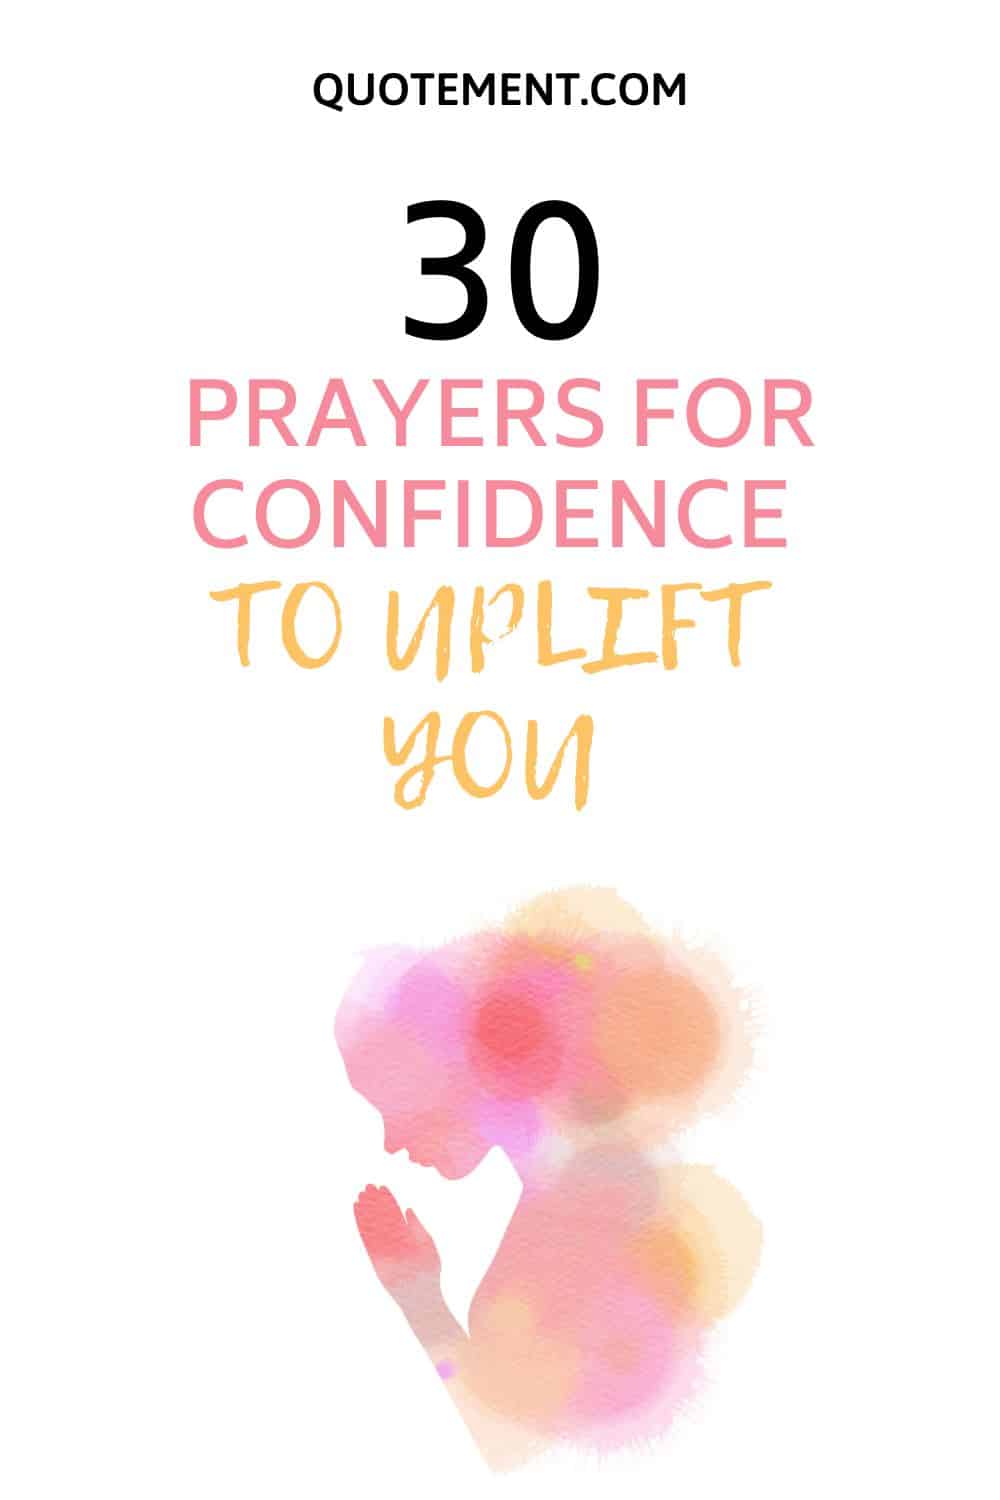 30 Prayers For Confidence To Help You Navigate Through Life
